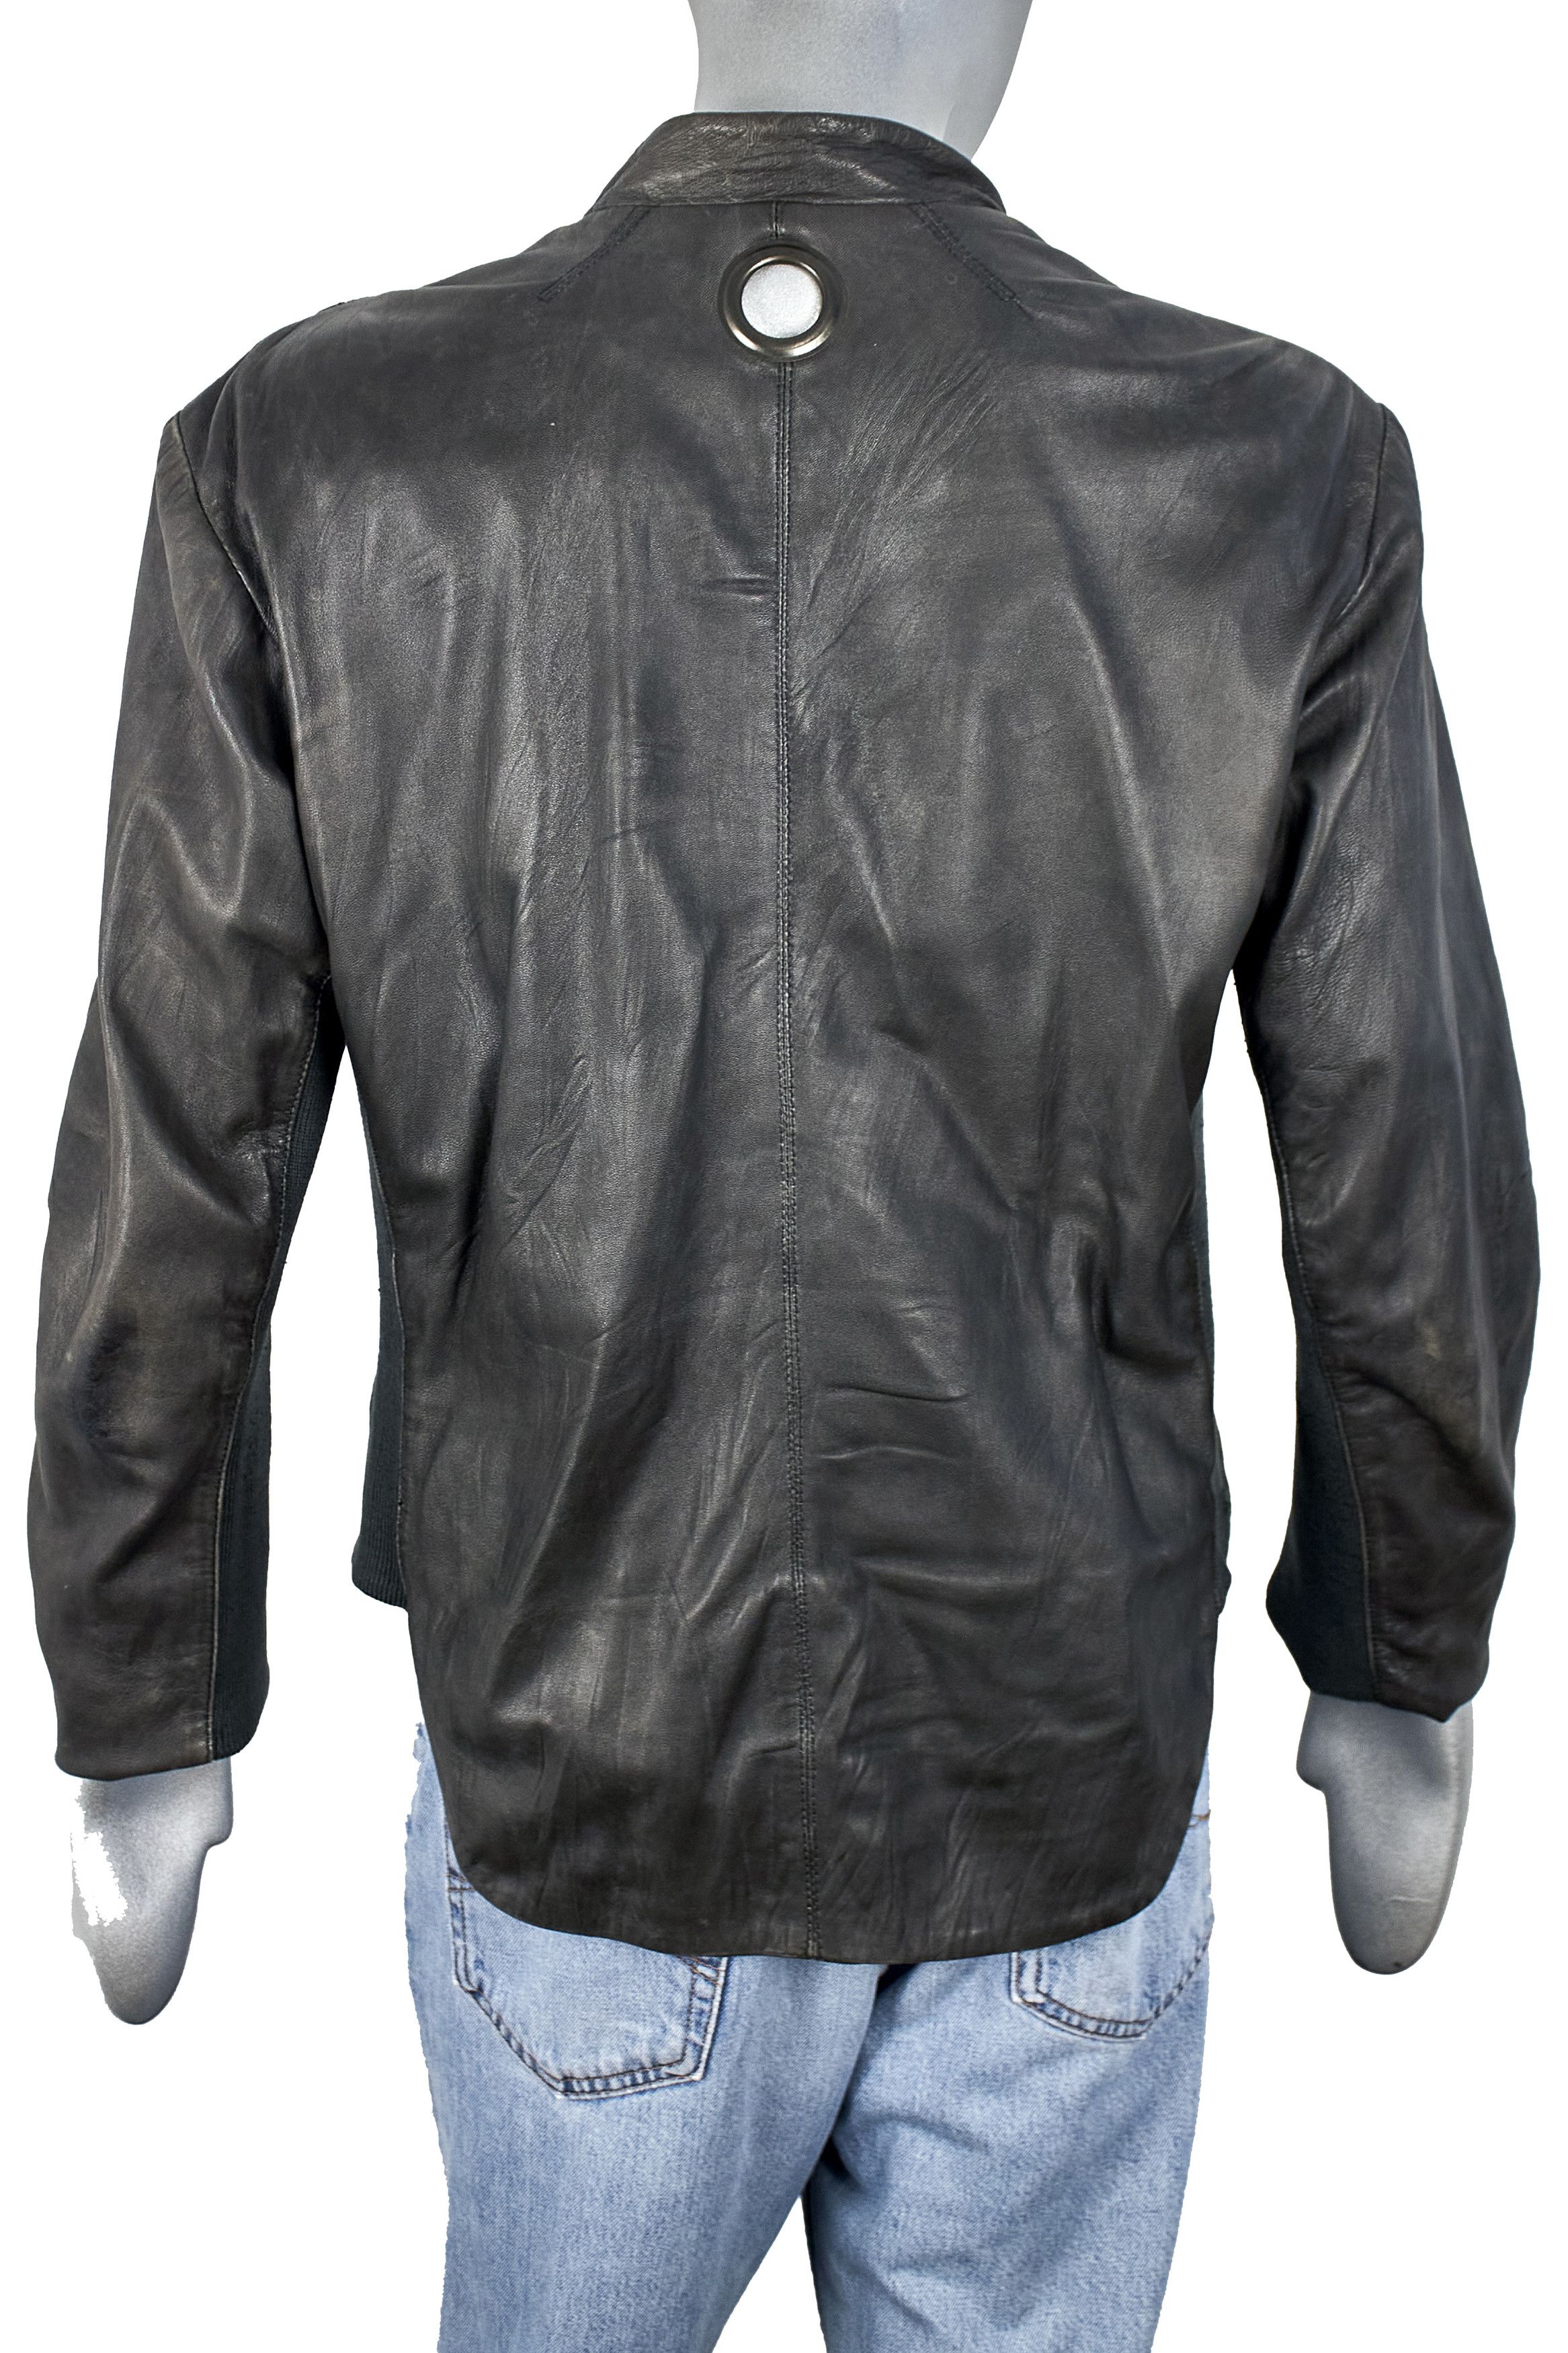 Delusion Delusion futuristic designer men's leather biker jacket Size US XL / EU 56 / 4 - 7 Thumbnail